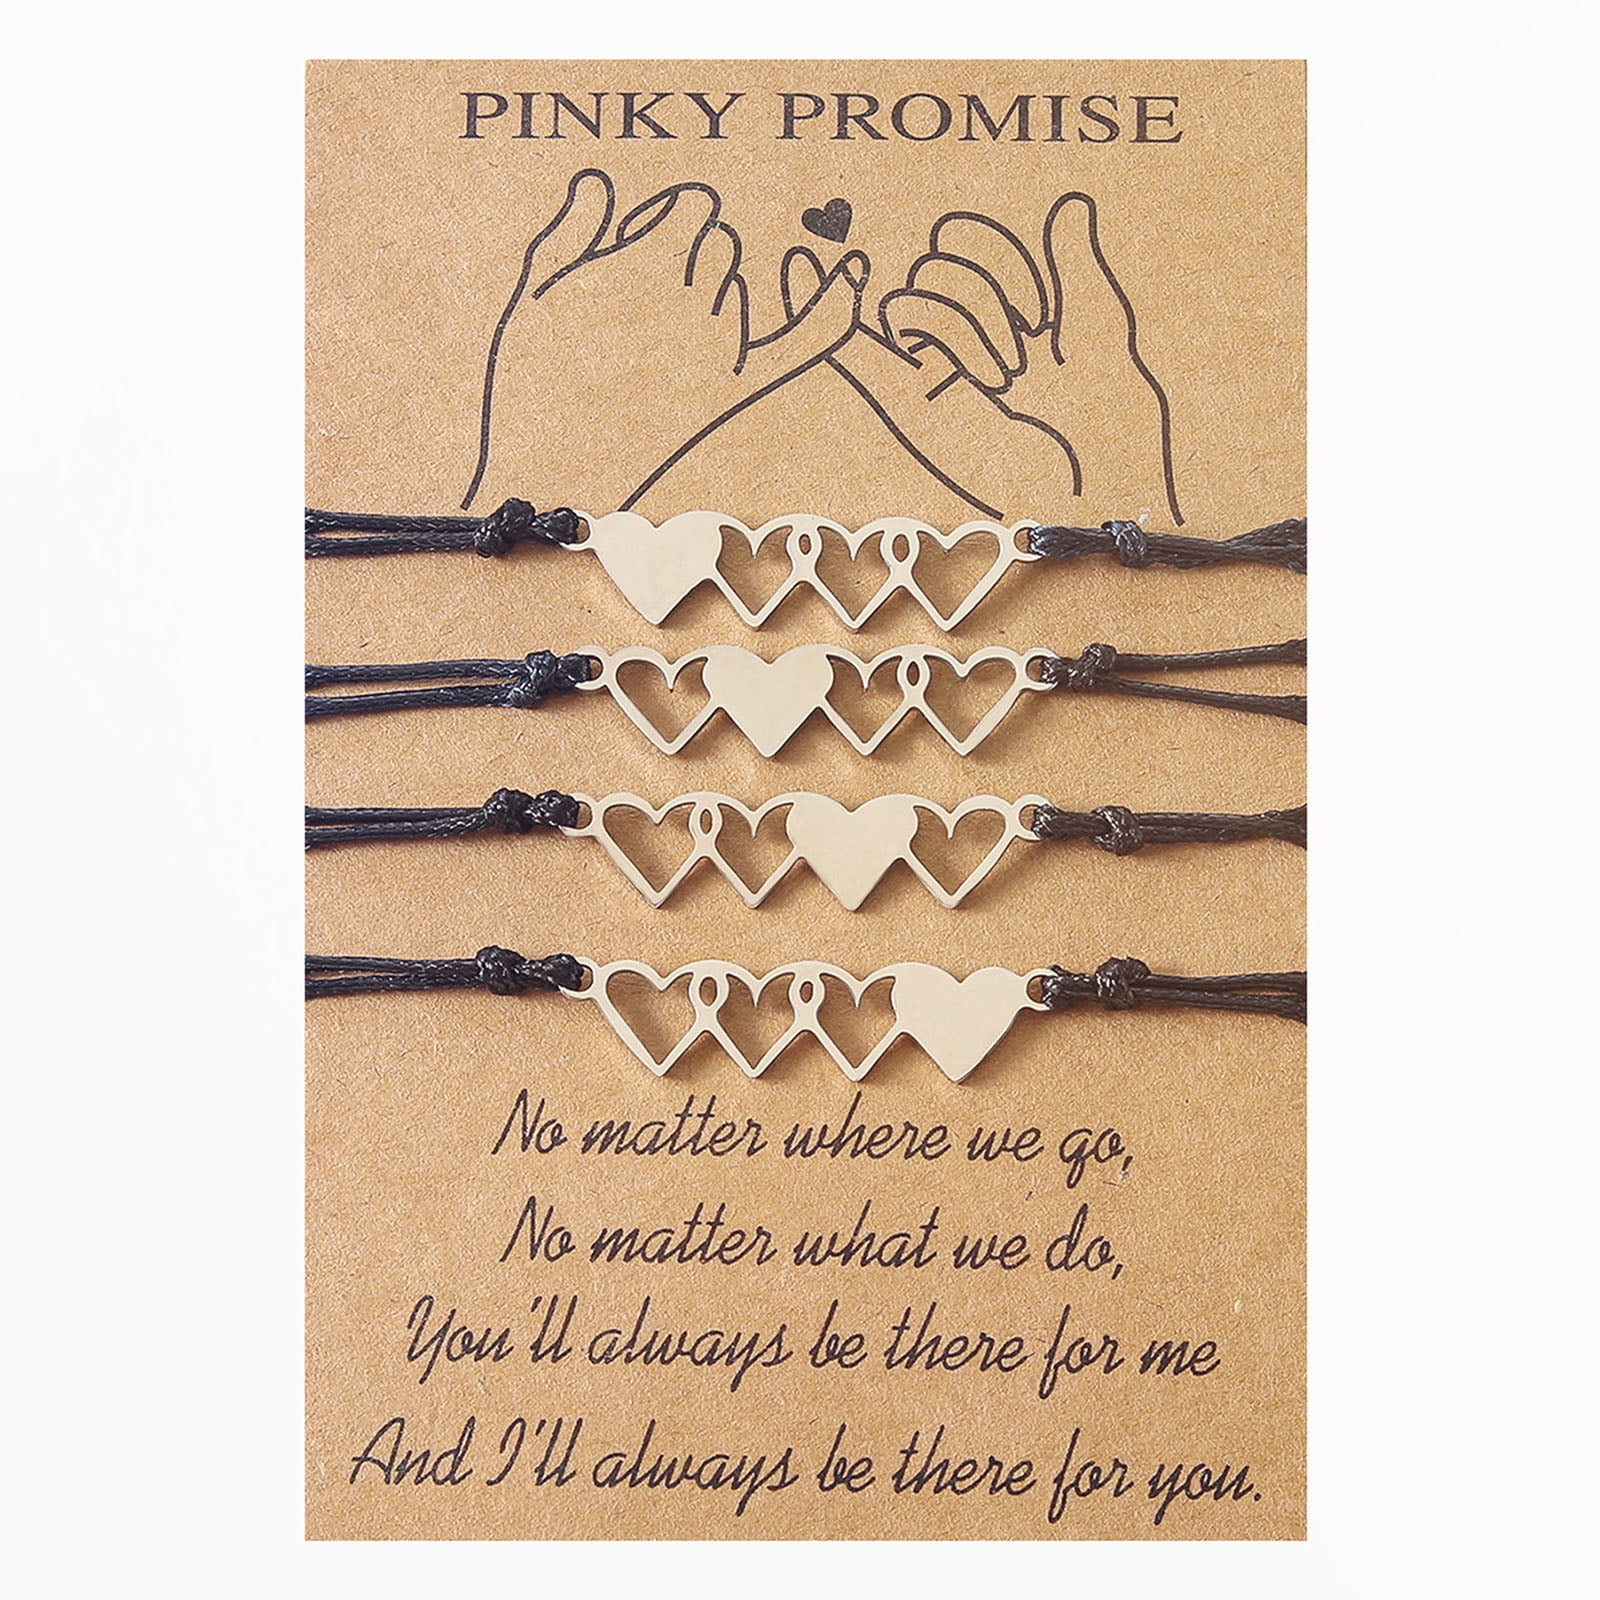 Husband & Wife Pinky Promise Wish Bracelet Set – Mudita Bracelets